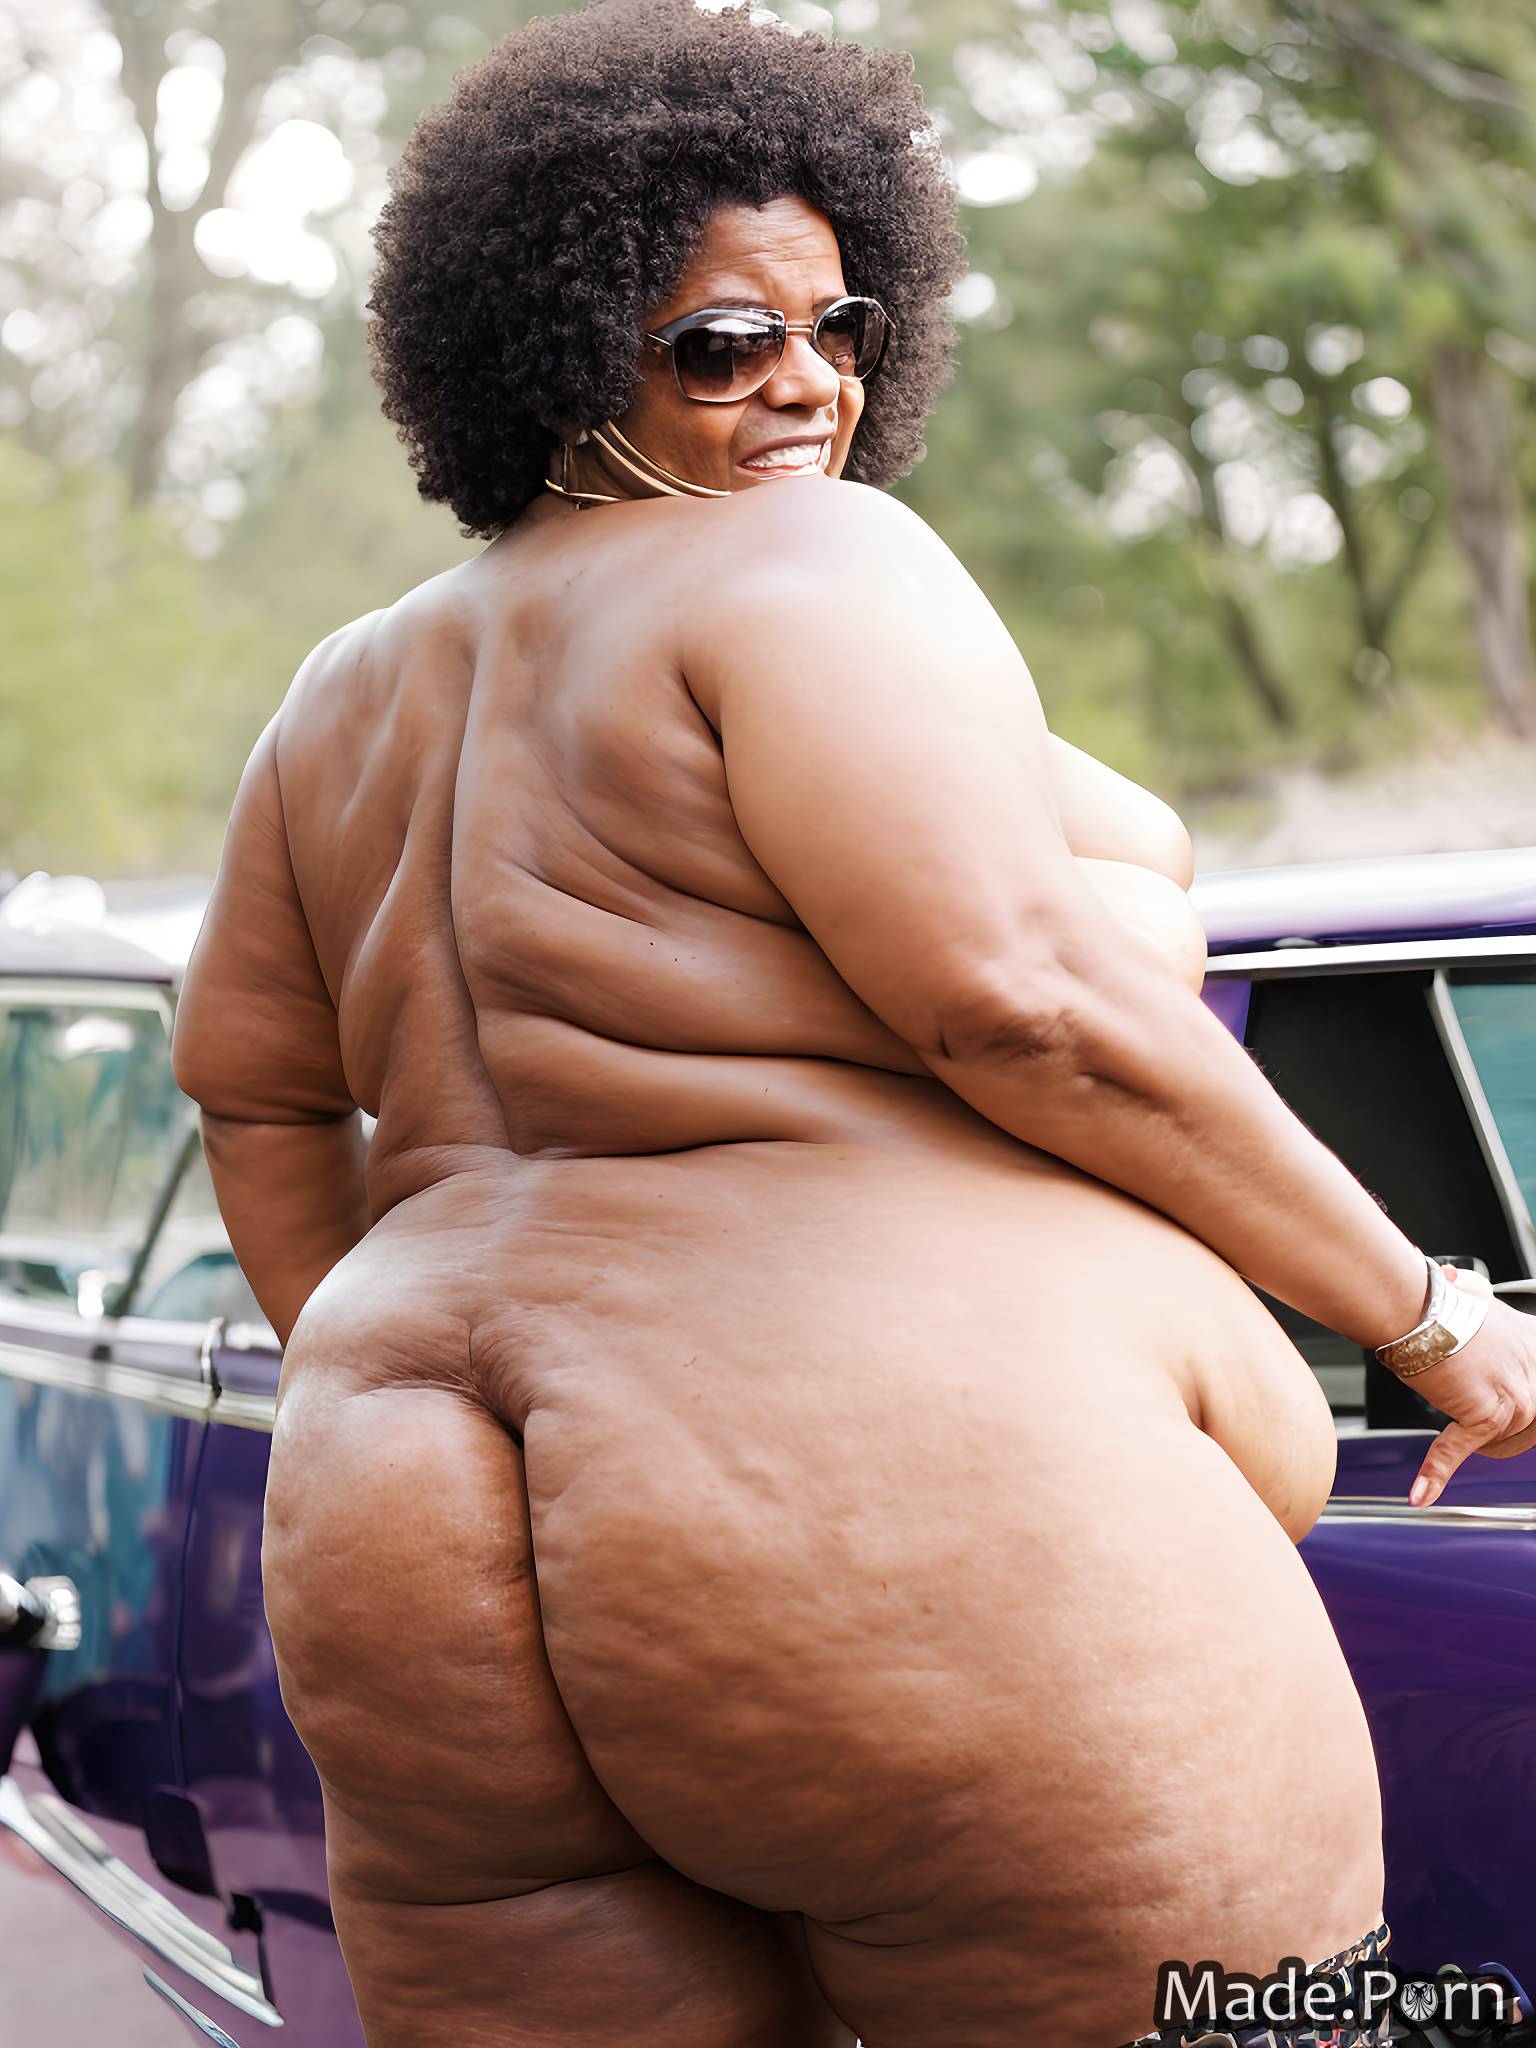 black hair bimbo african american short looking at viewer fat thick thighs